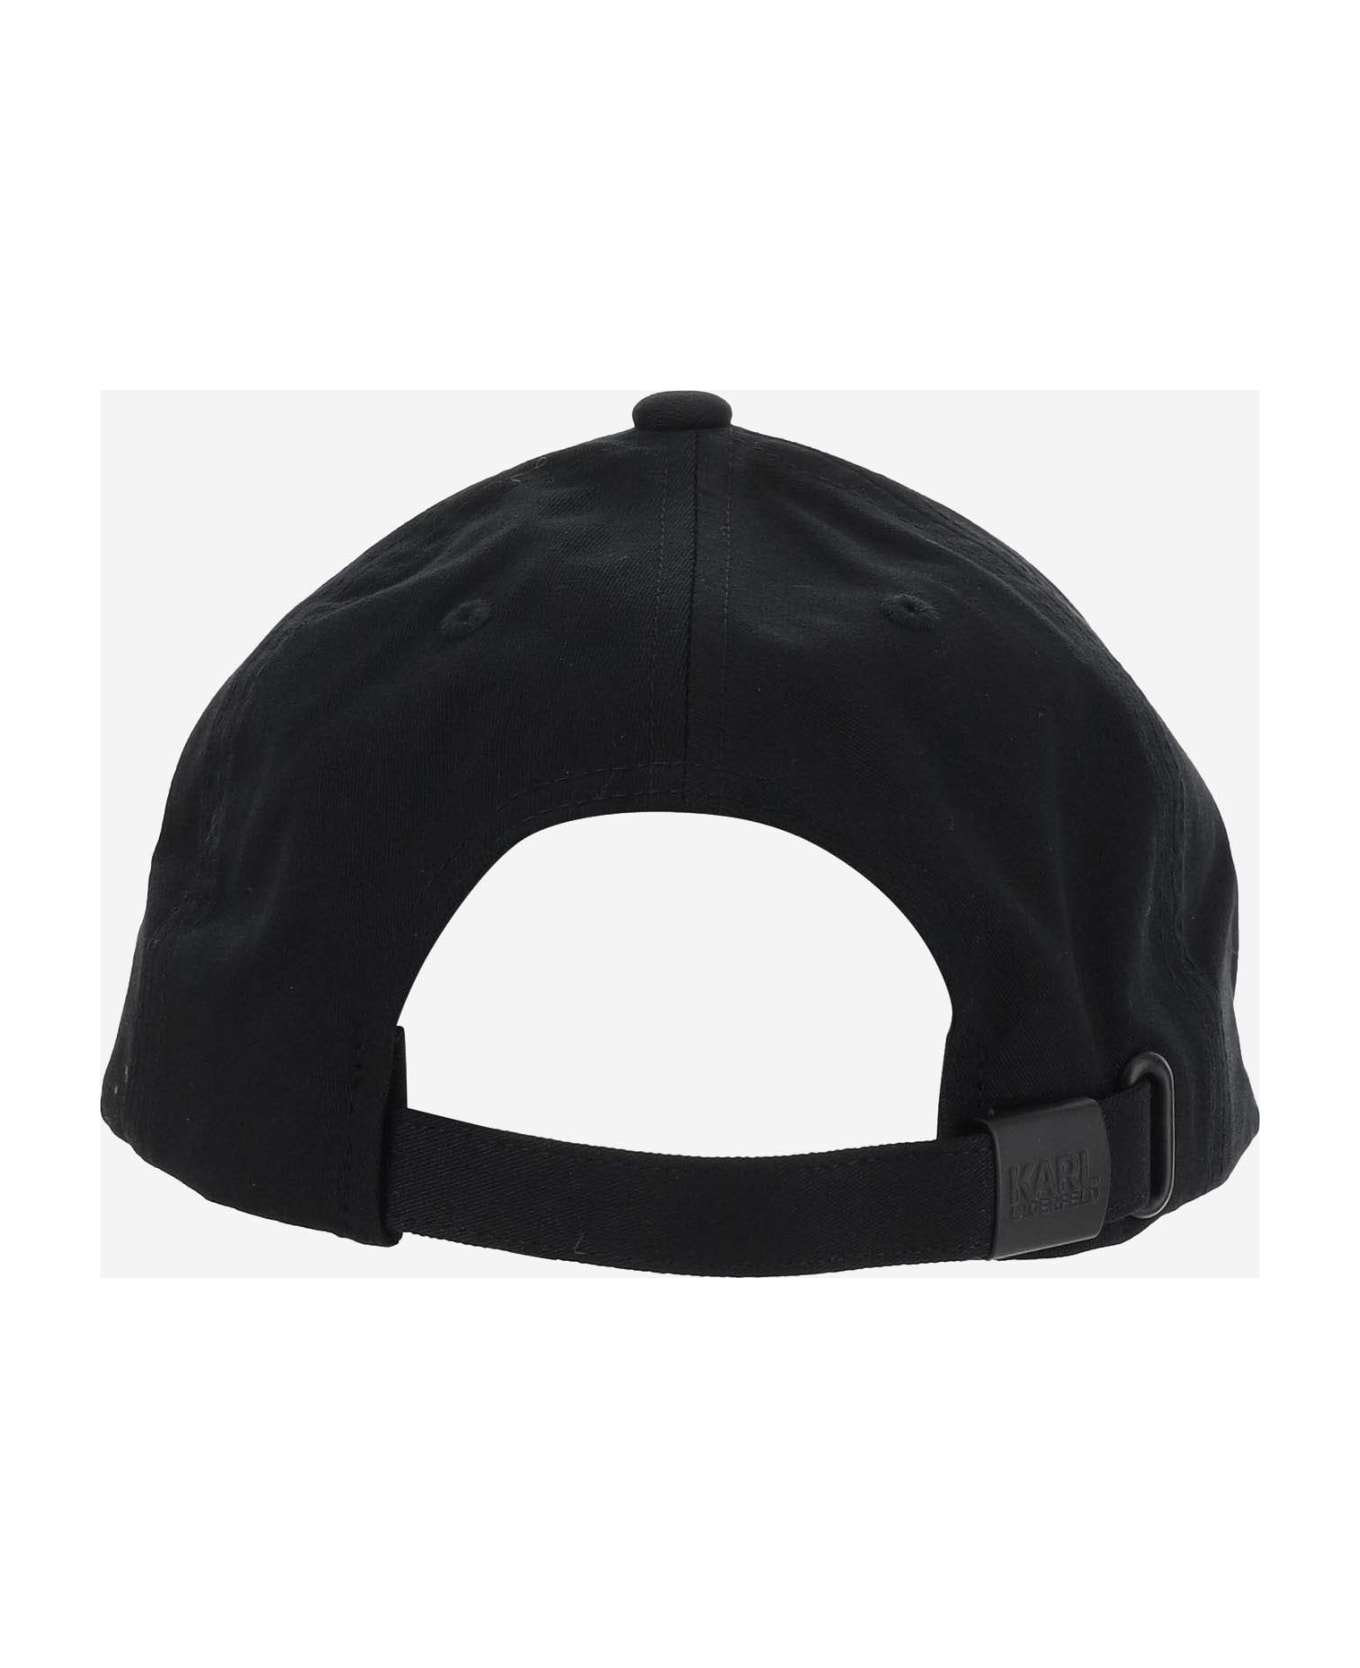 Karl Lagerfeld Cotton Blend Baseball Cap With Logo - Black